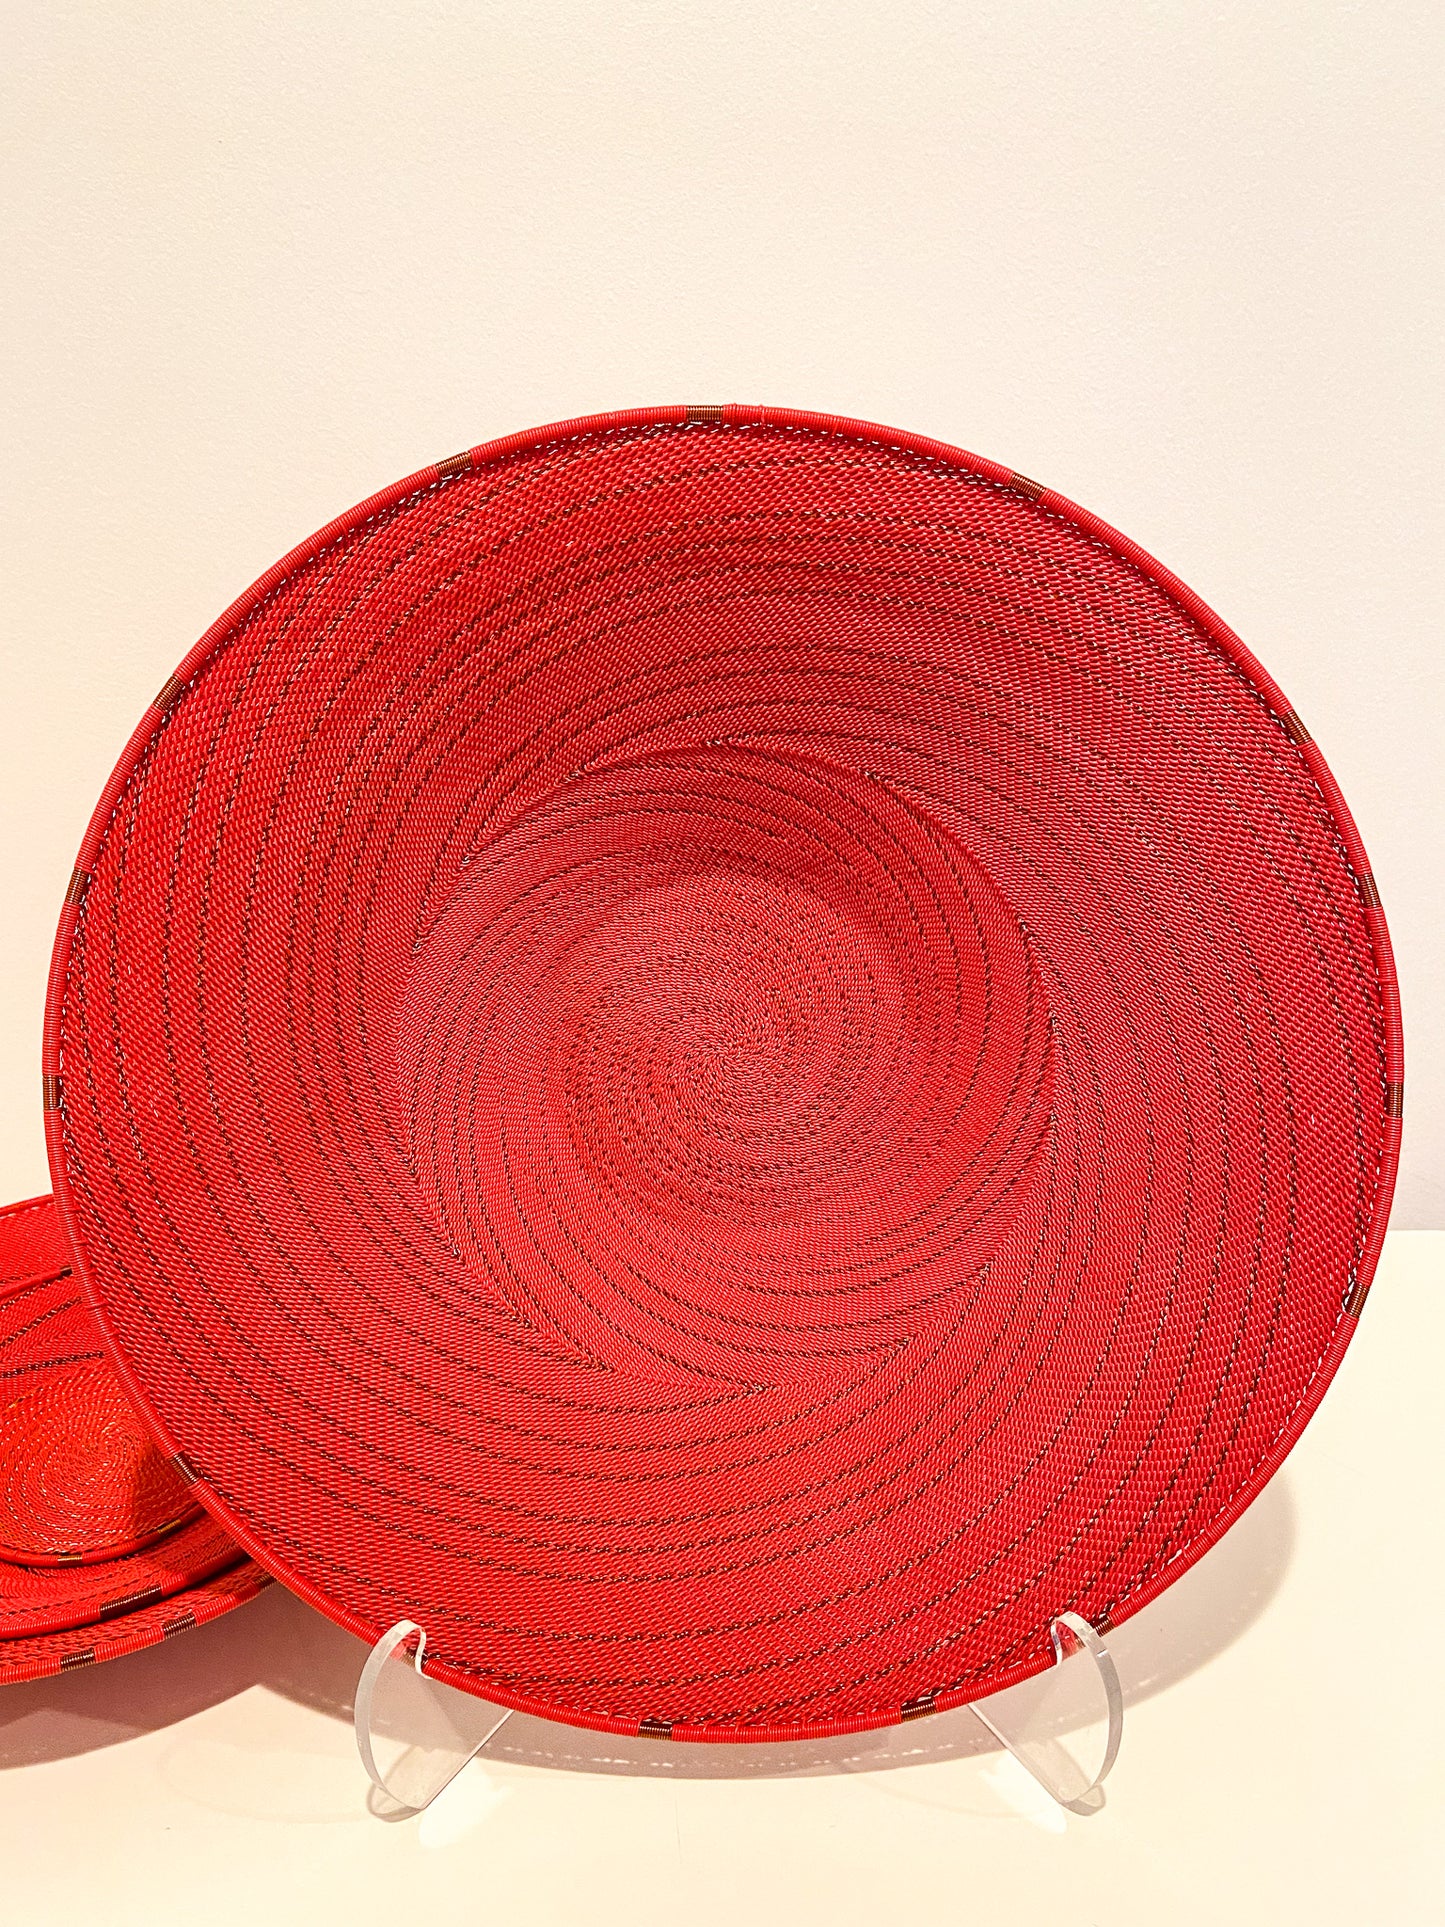 Medium Open V Telephone Wire Plate - Red & Copper